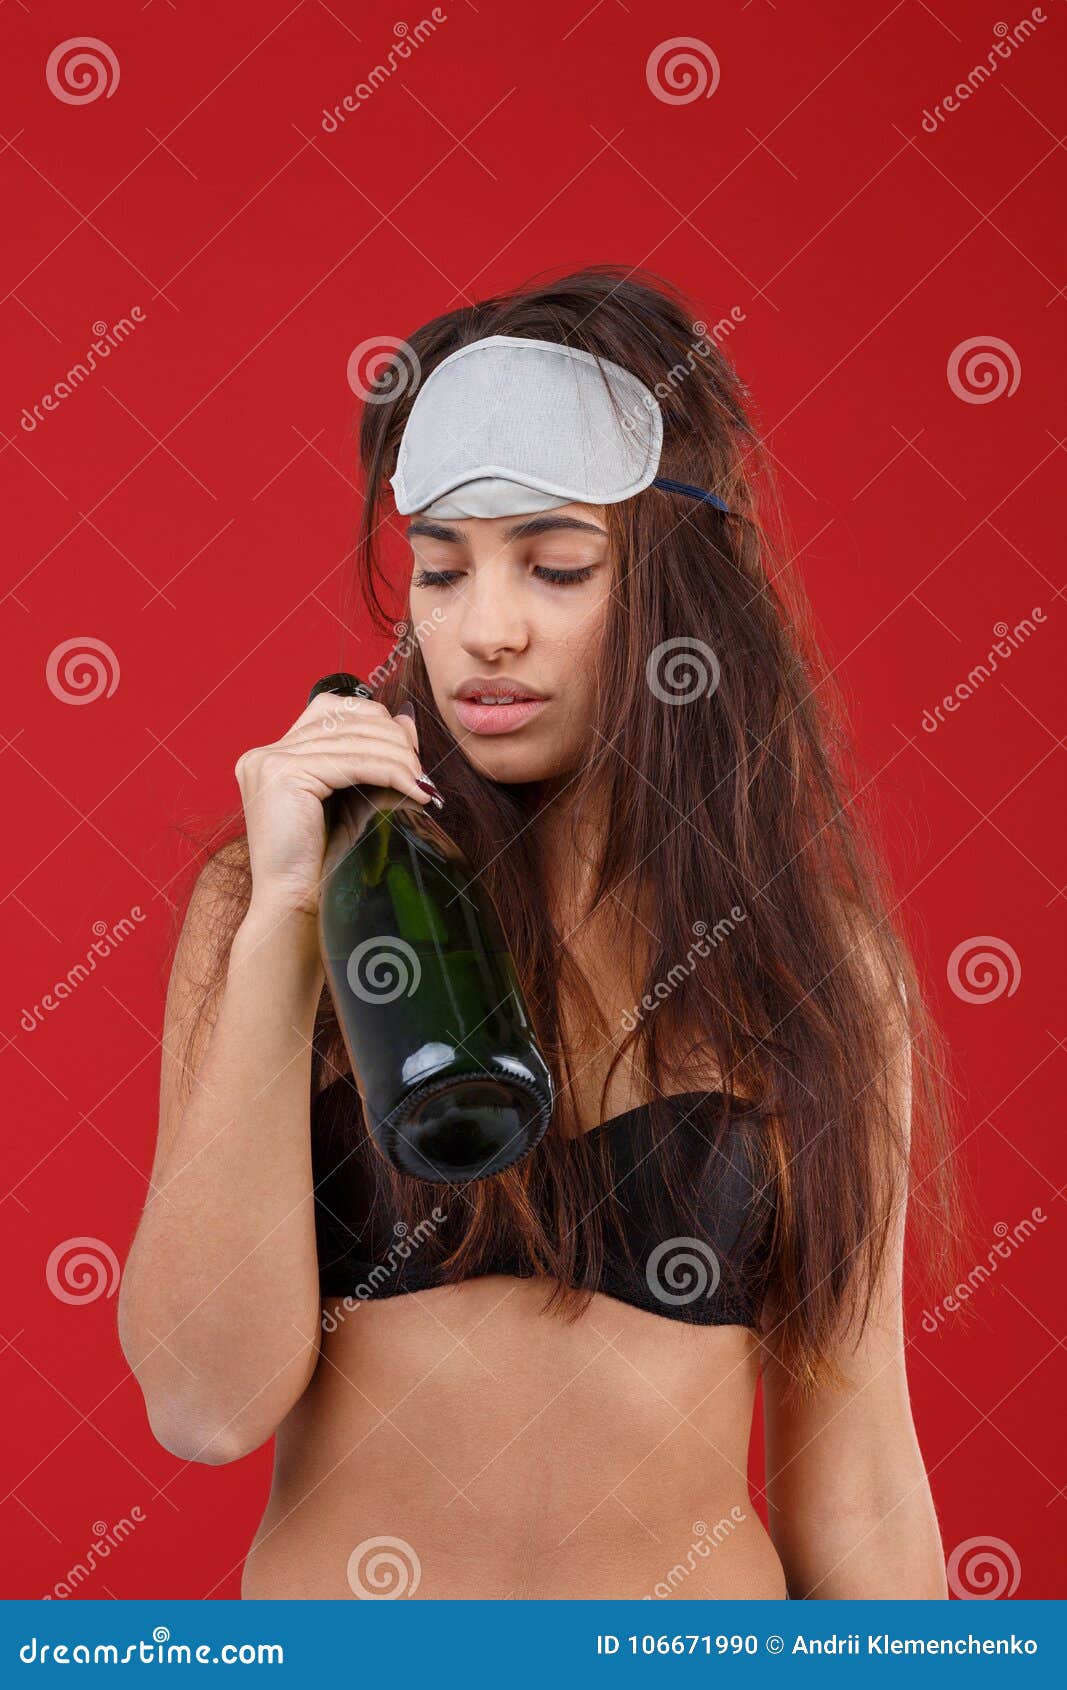 https://thumbs.dreamstime.com/z/young-girl-bra-sleeping-mask-holds-bottle-alcohol-looks-red-background-european-brunette-black-green-her-hand-106671990.jpg